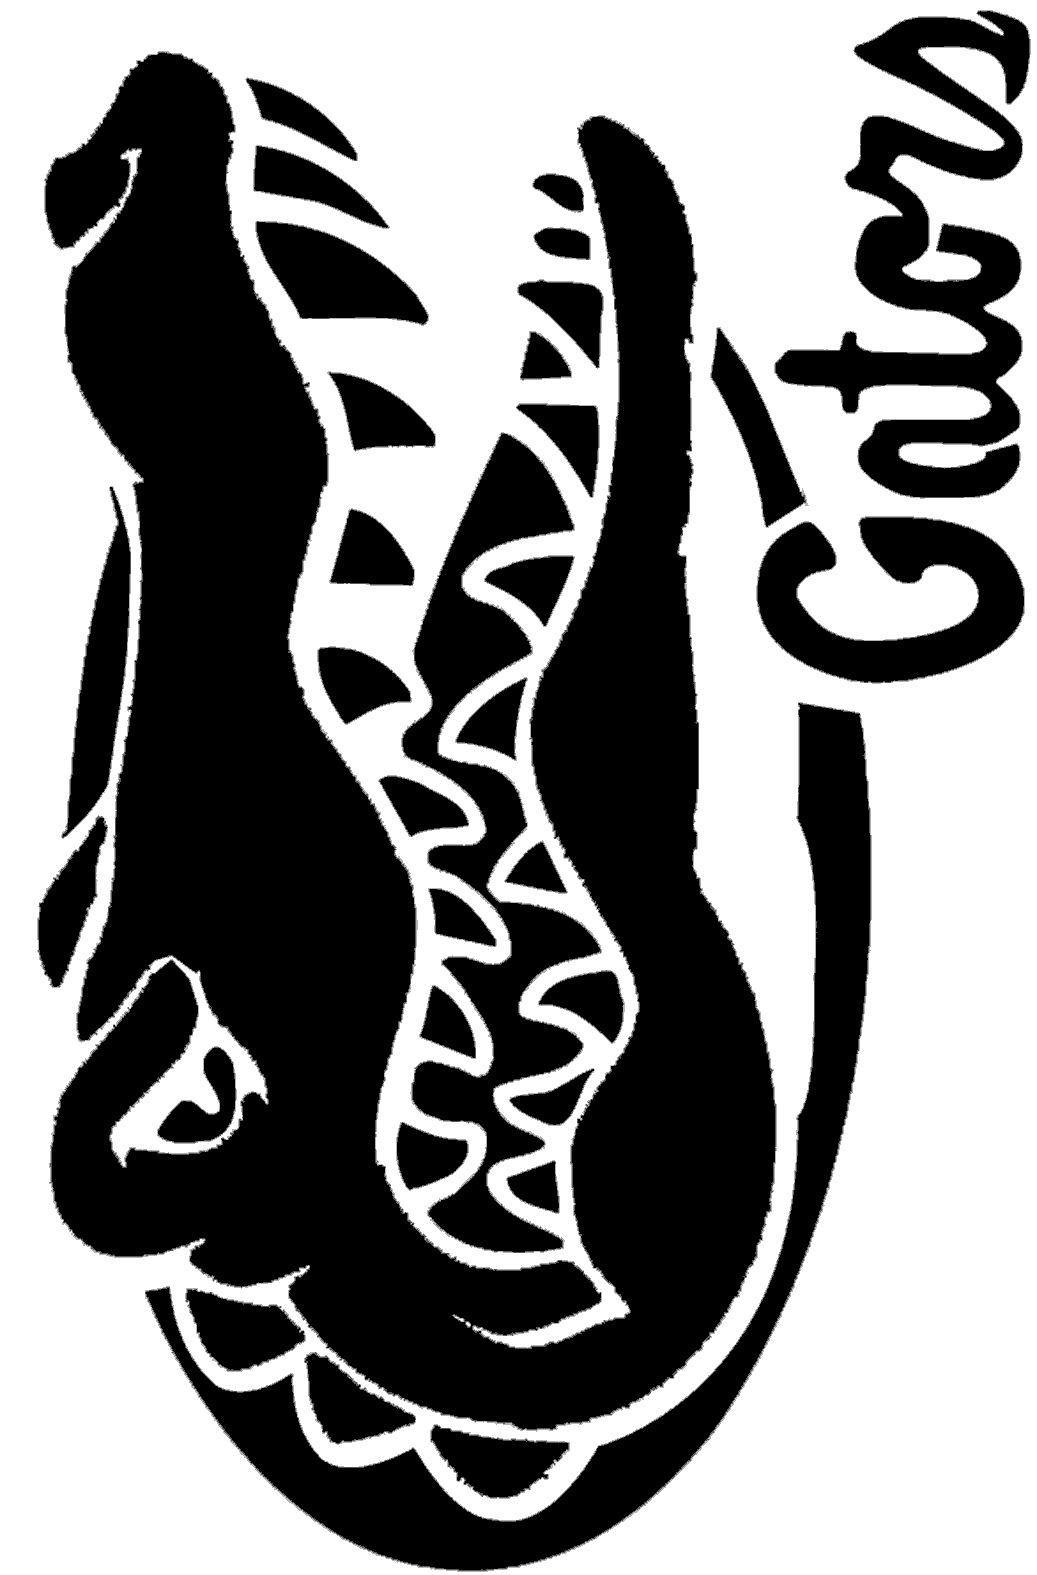 Black and White Gator Logo - And Florida Gators Logo Black White. All kinds of stuff